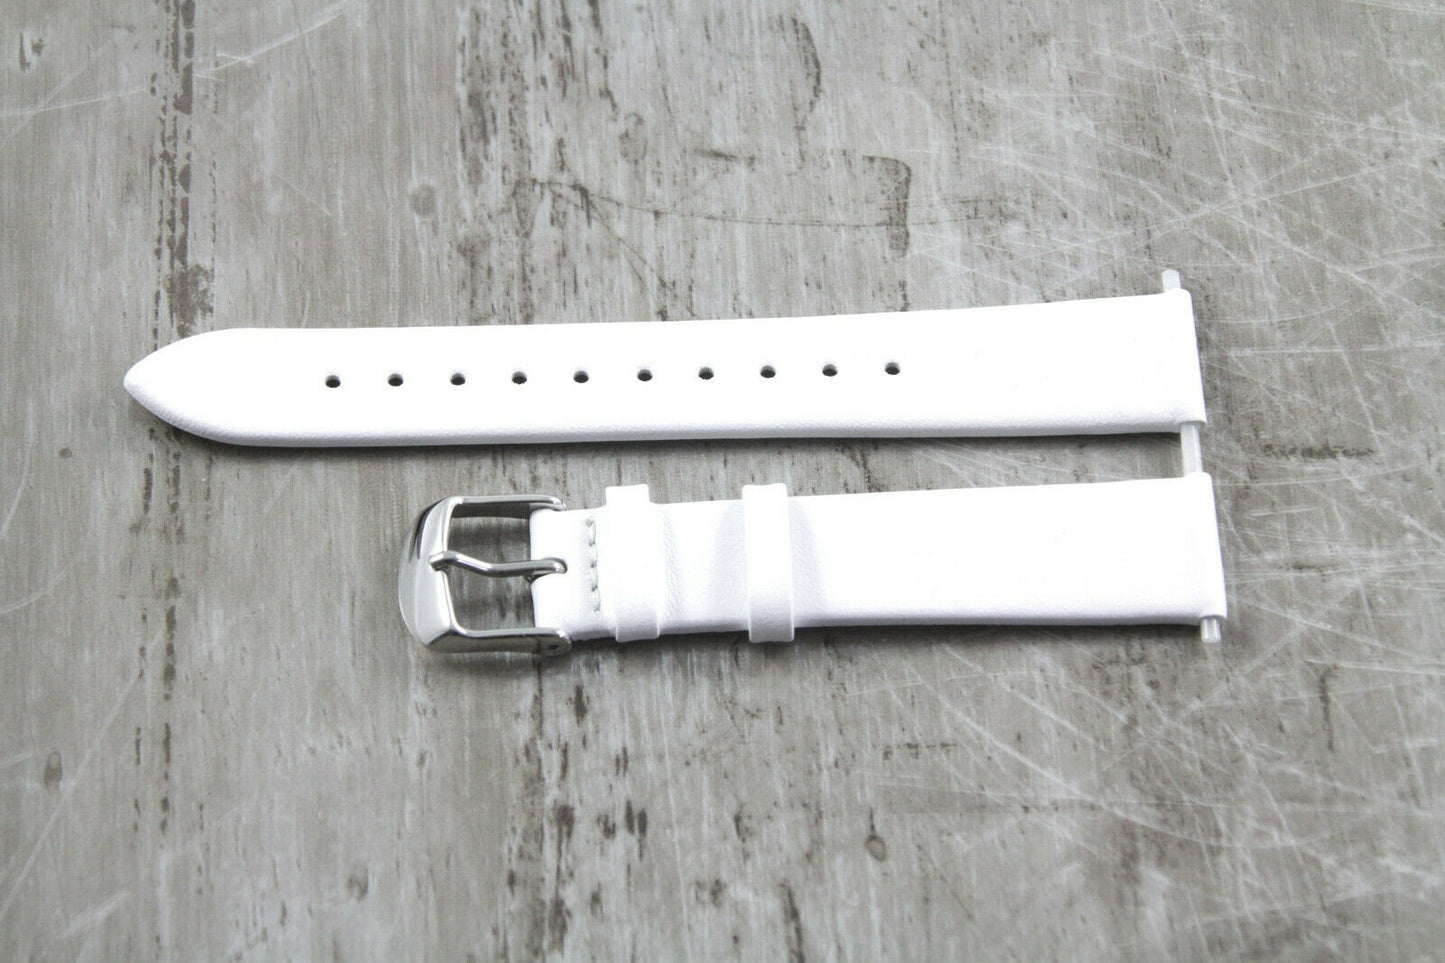 Timex Ersatzarmband TW2R66500 Crystal Bloom - 18mm - Leder - universal - weiß